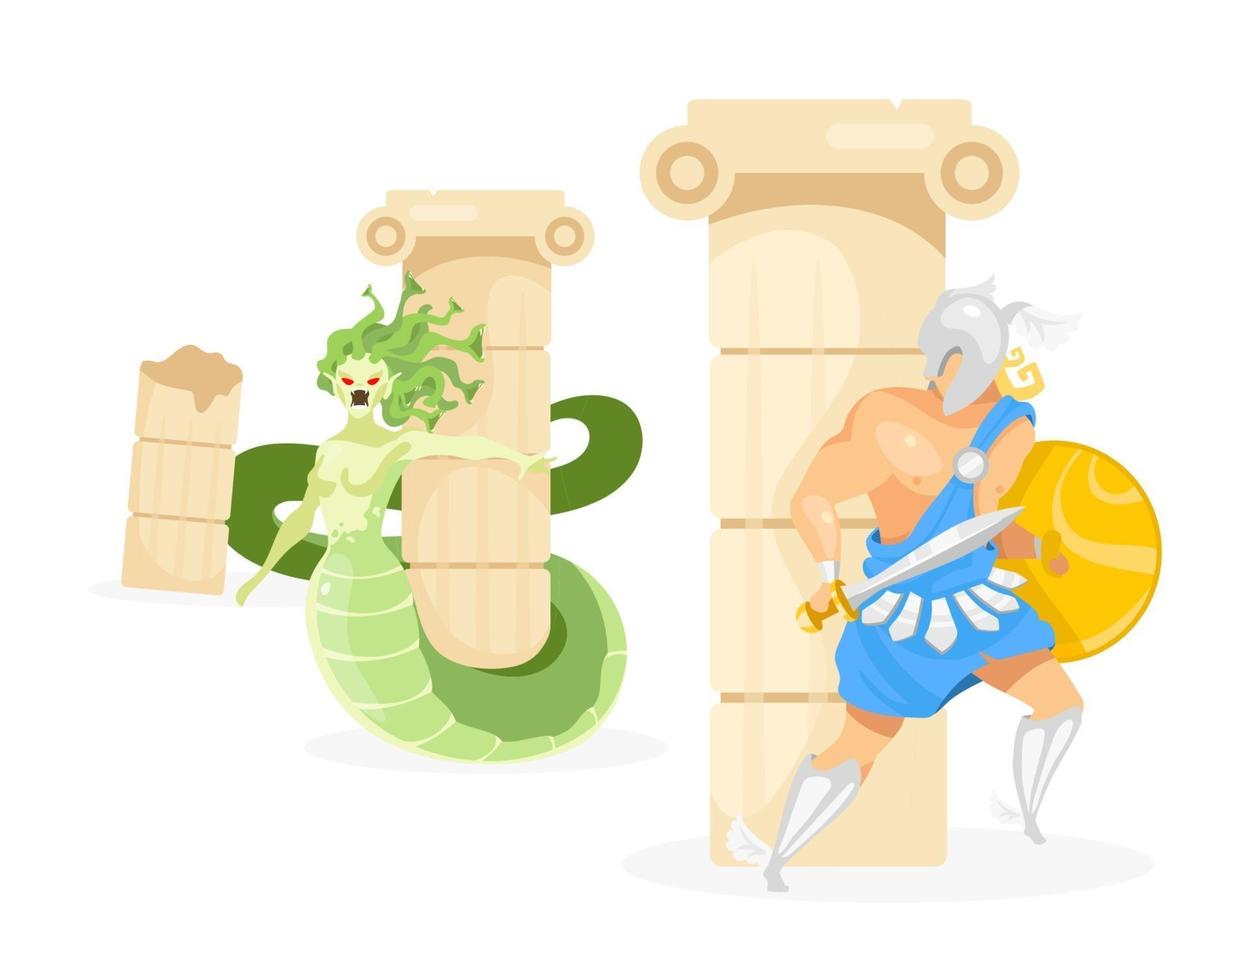 Perseus and Medusa flat vector illustration. Hero fighting fantastical creature. Half-woman, half-serpent monster. Greek mythology. Fight scene isolated cartoon character on white background